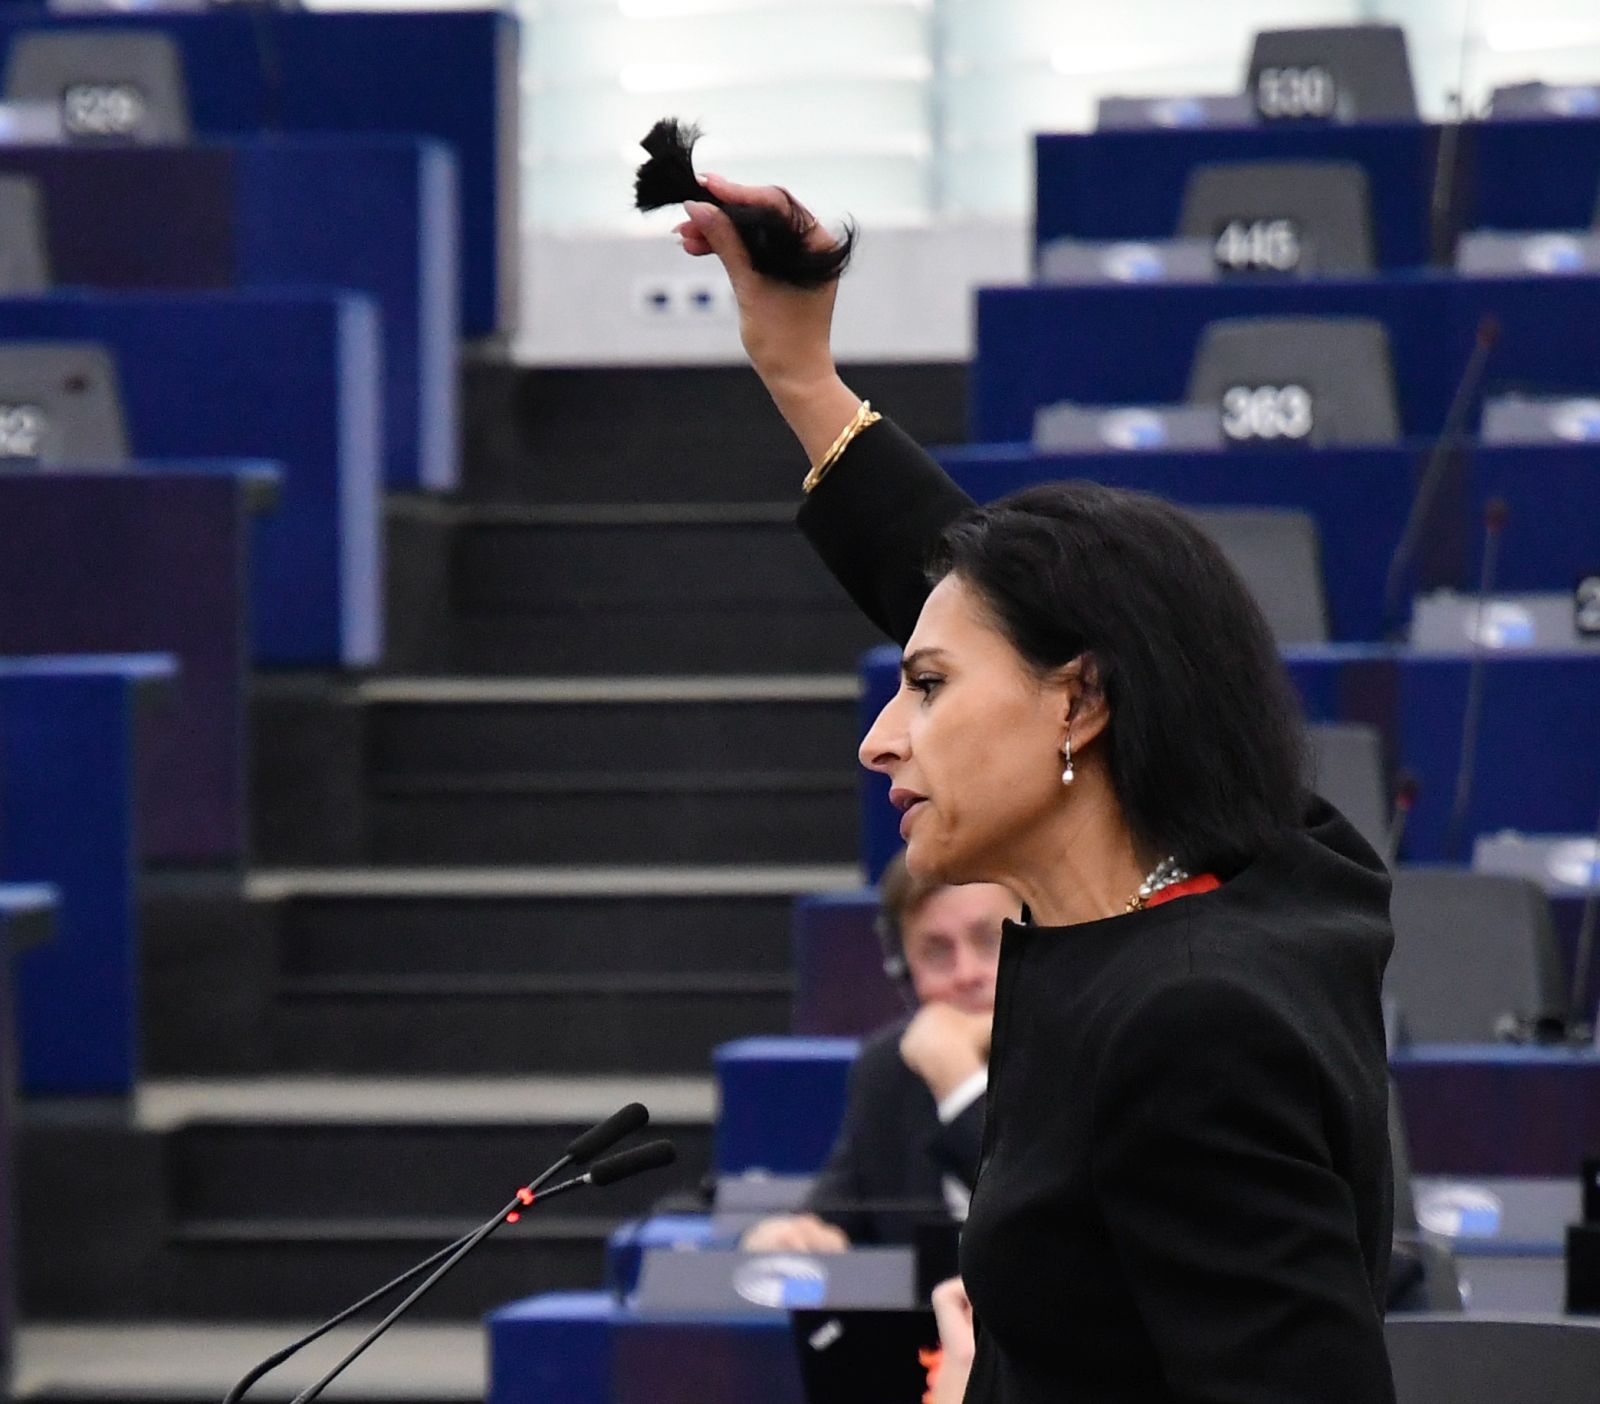 EP Plenary session - The death of Mahsa Amini and the repression of women's rights protesters in Iran